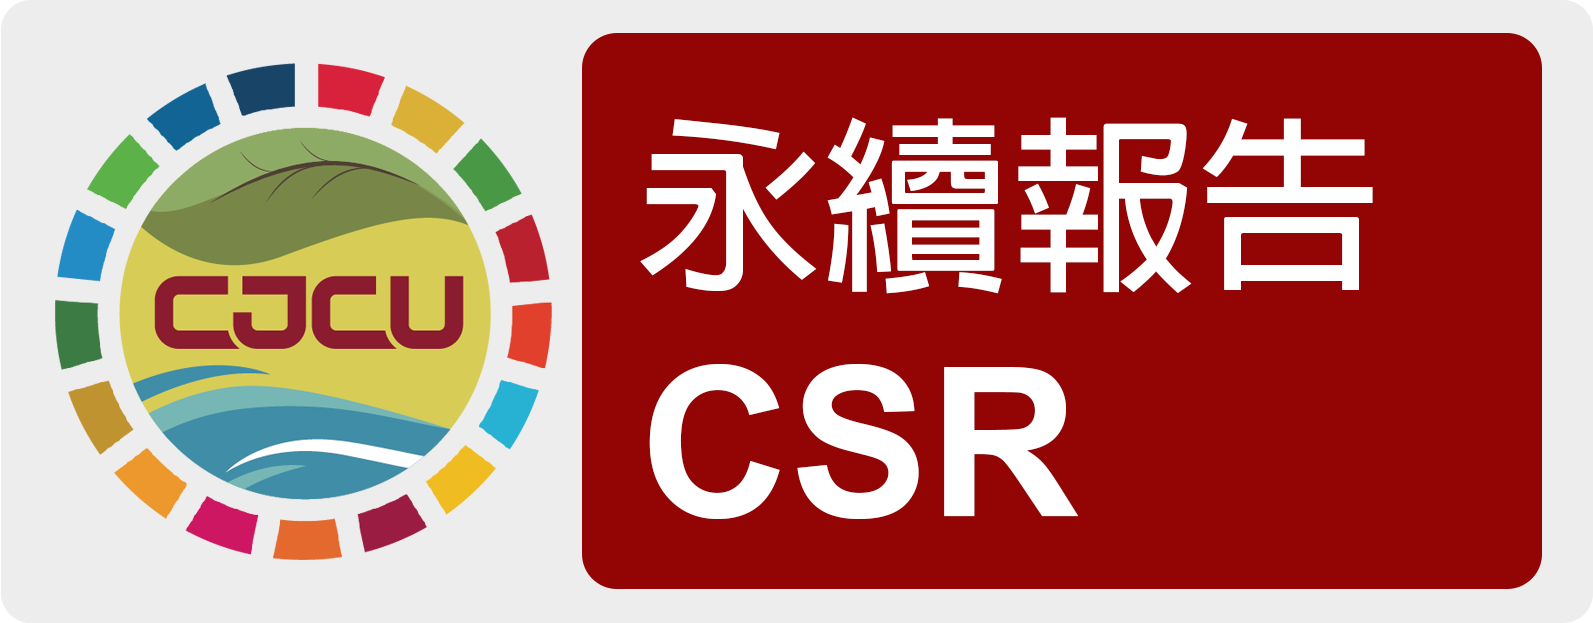 CSR永續報告圖示